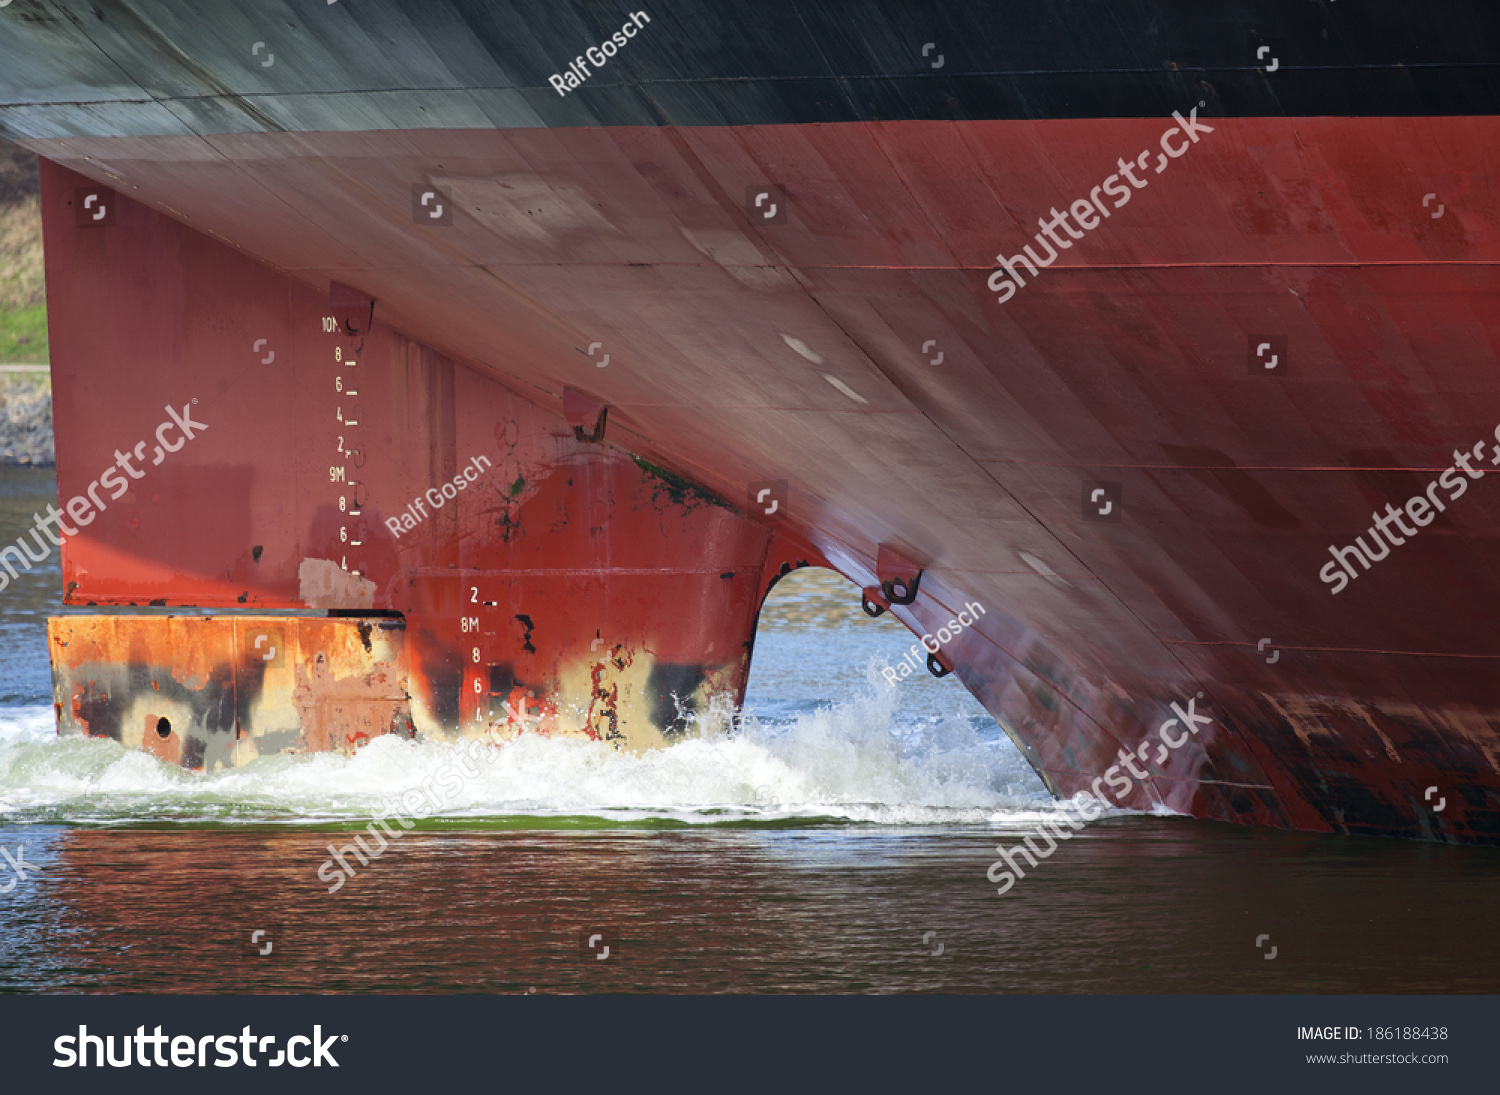 Stern Of A Tanker Ship Stock Photo 186188438 : Shutterstock